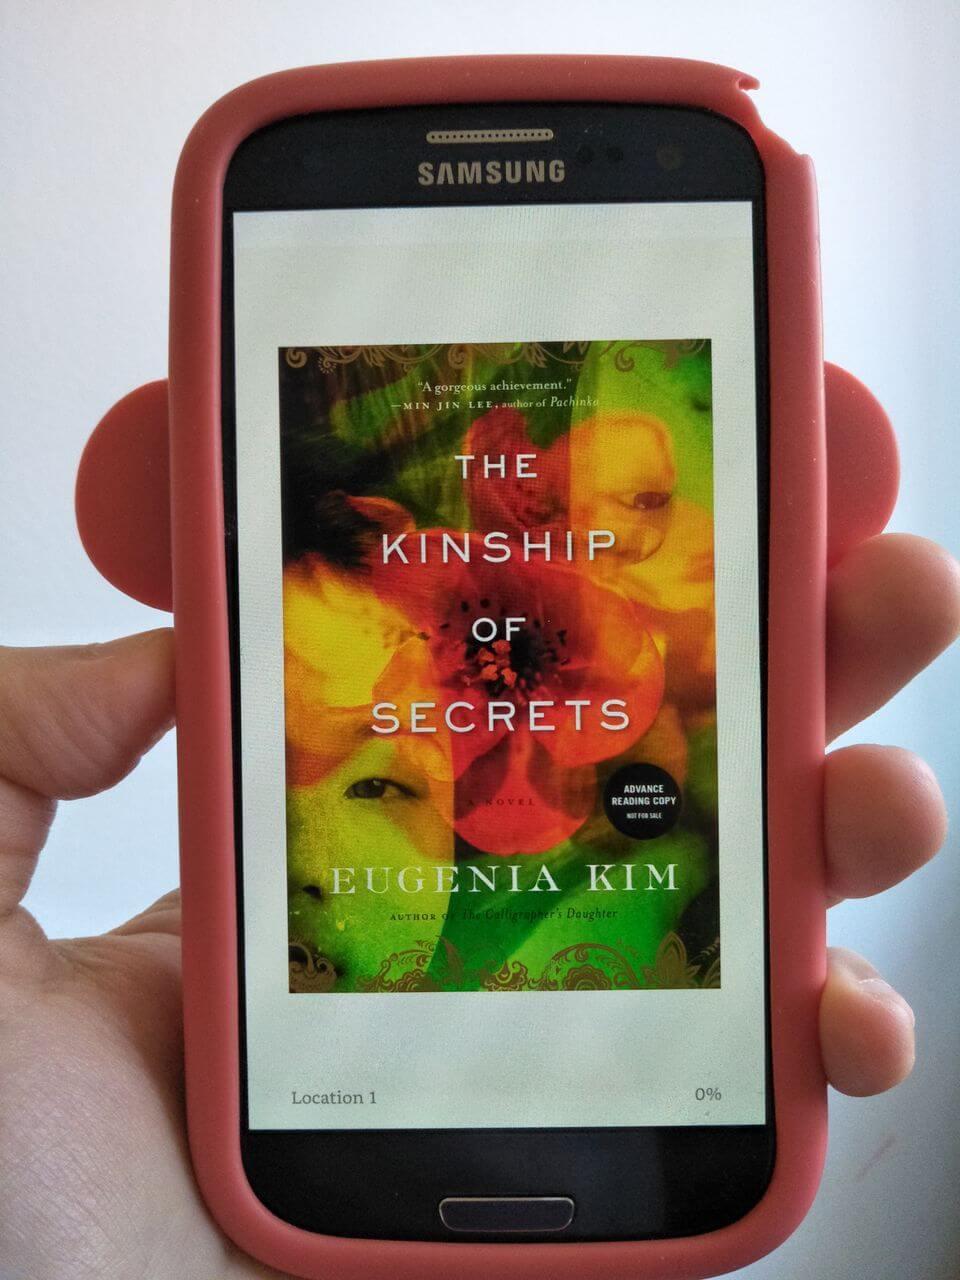 The Kinship of Secrets by Eugenia Kim